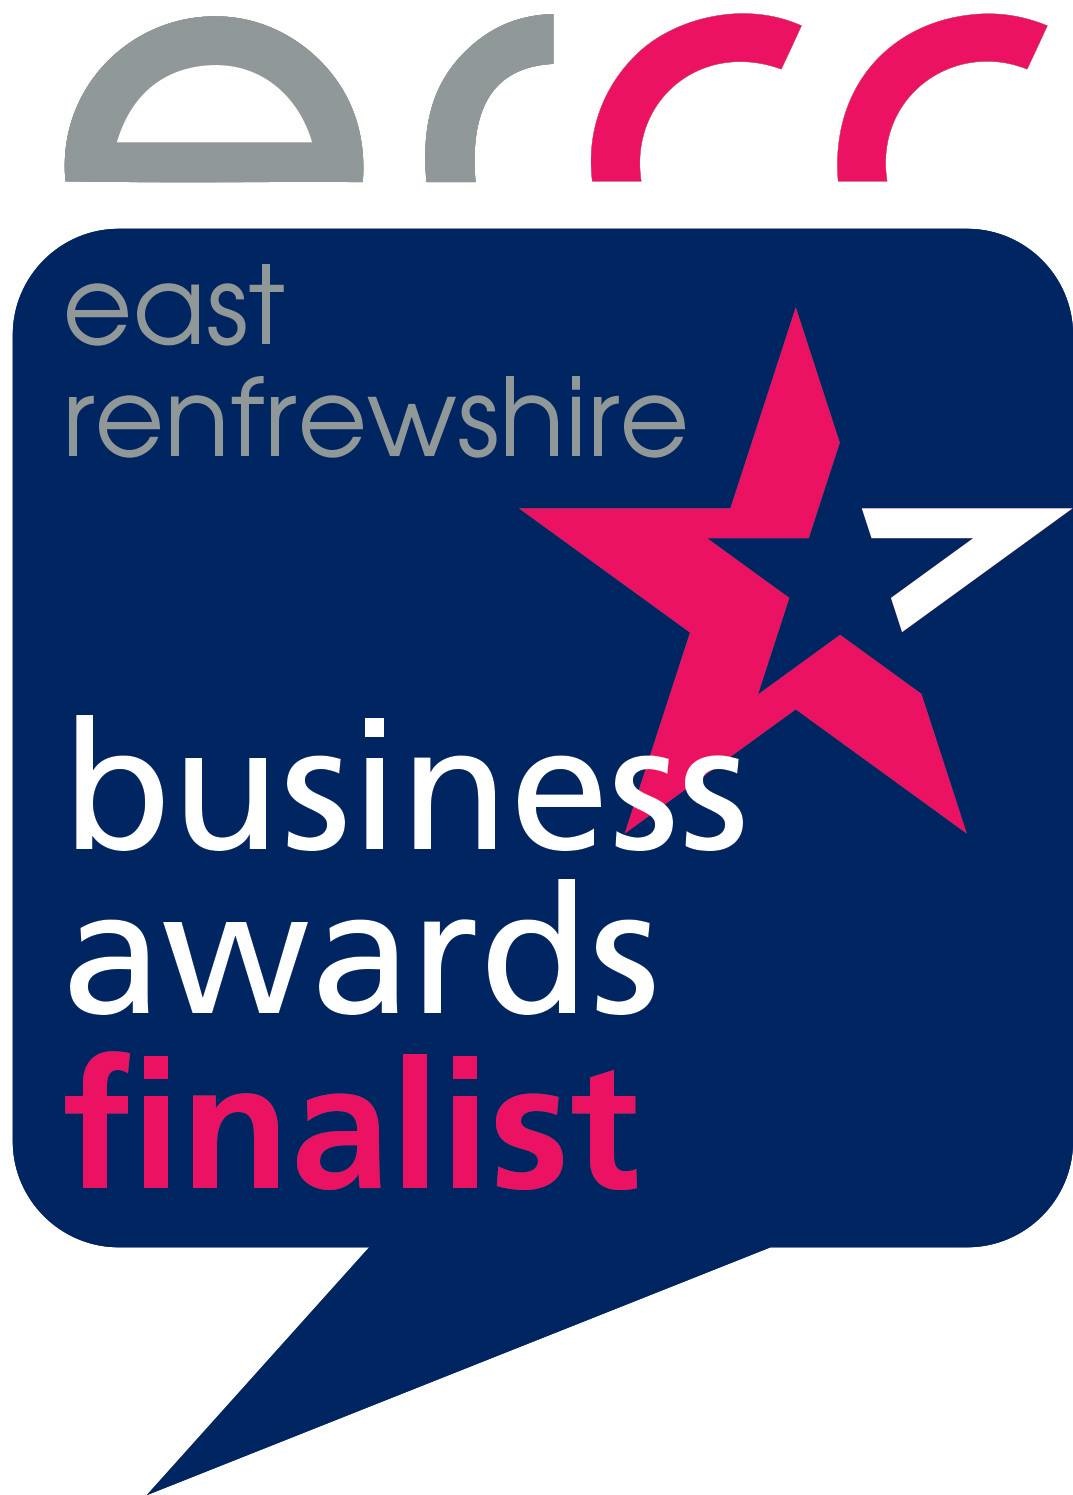 Finalist in the East Renfrewshire Best Business Awards